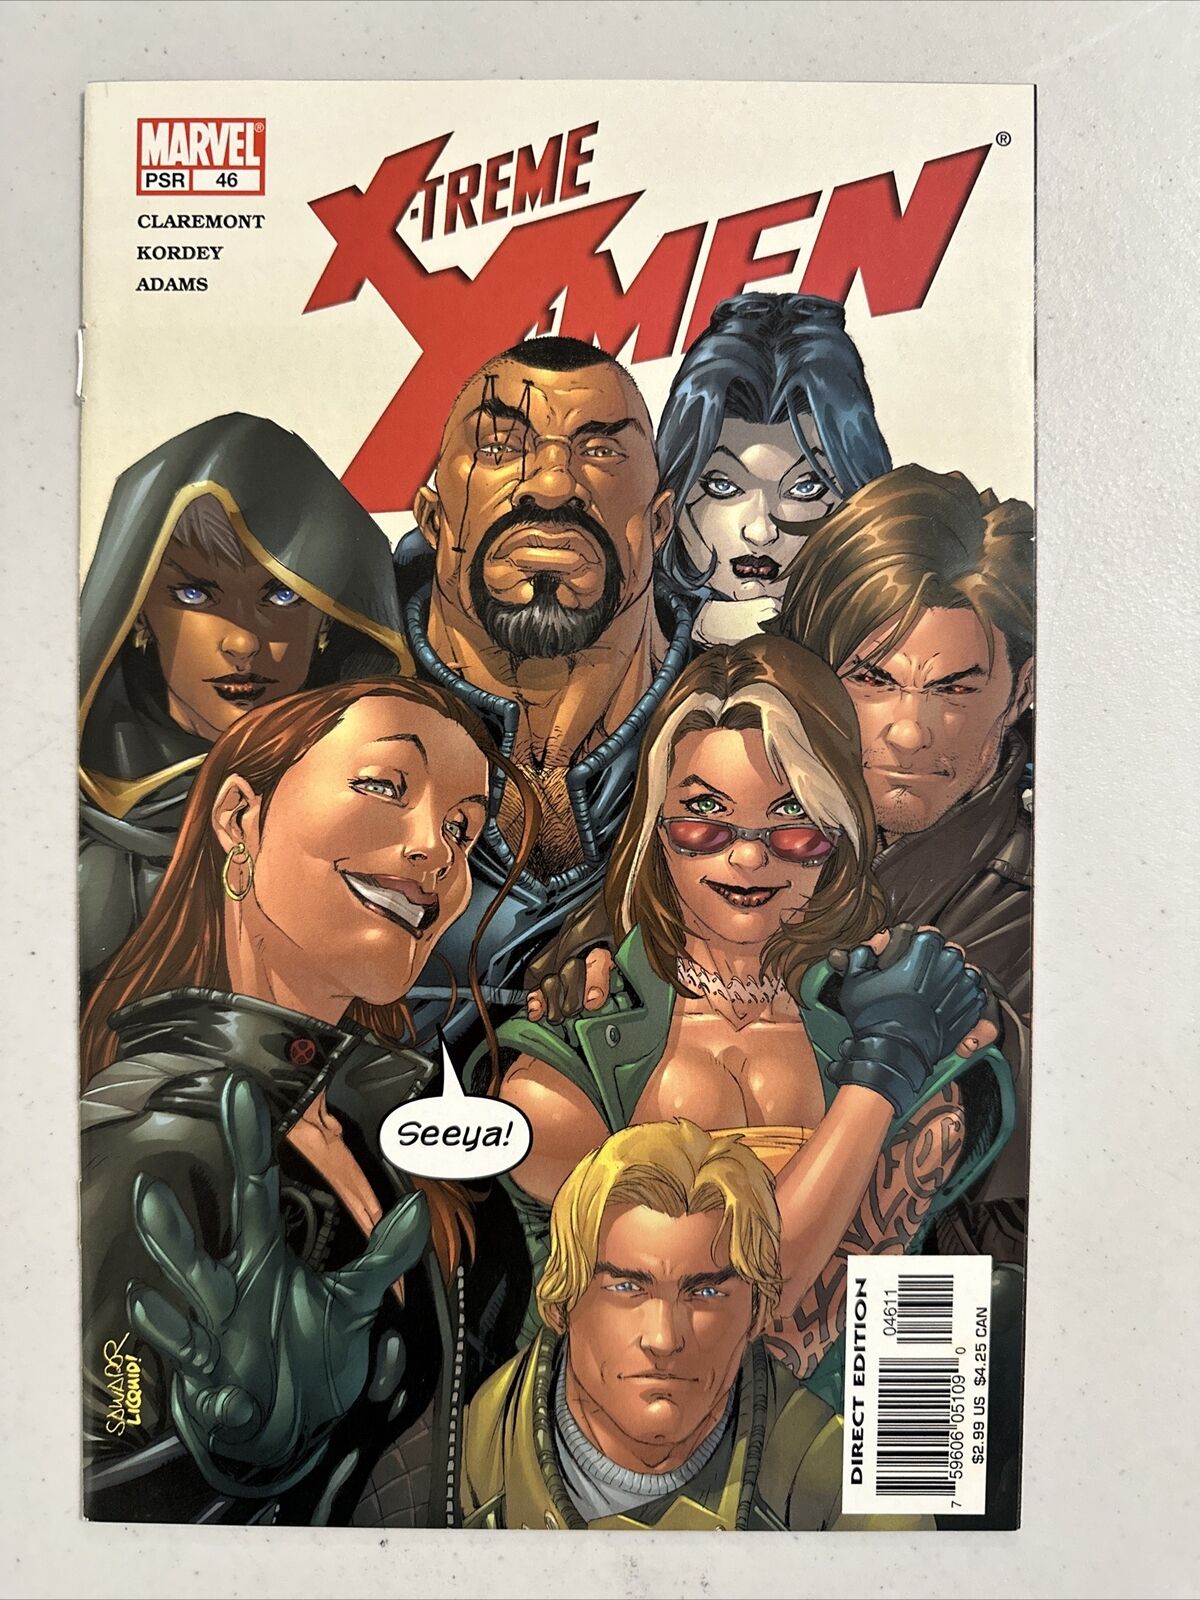 X-Treme X-Men #46 Marvel Comics HIGH GRADE COMBINE S&H